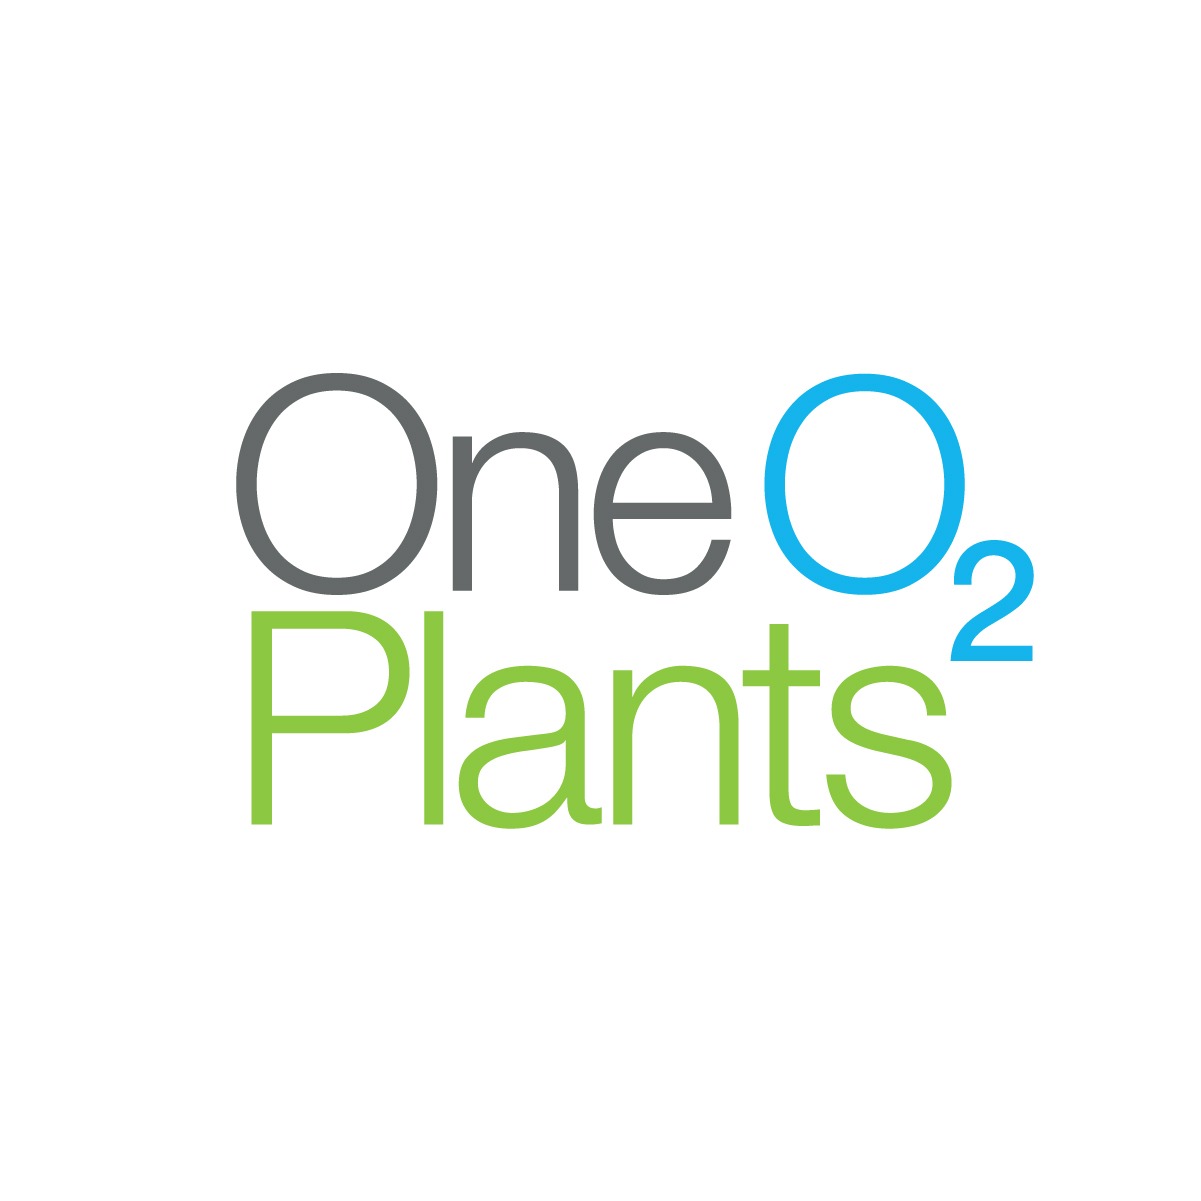 Oneo2plants Pte. Ltd. company logo